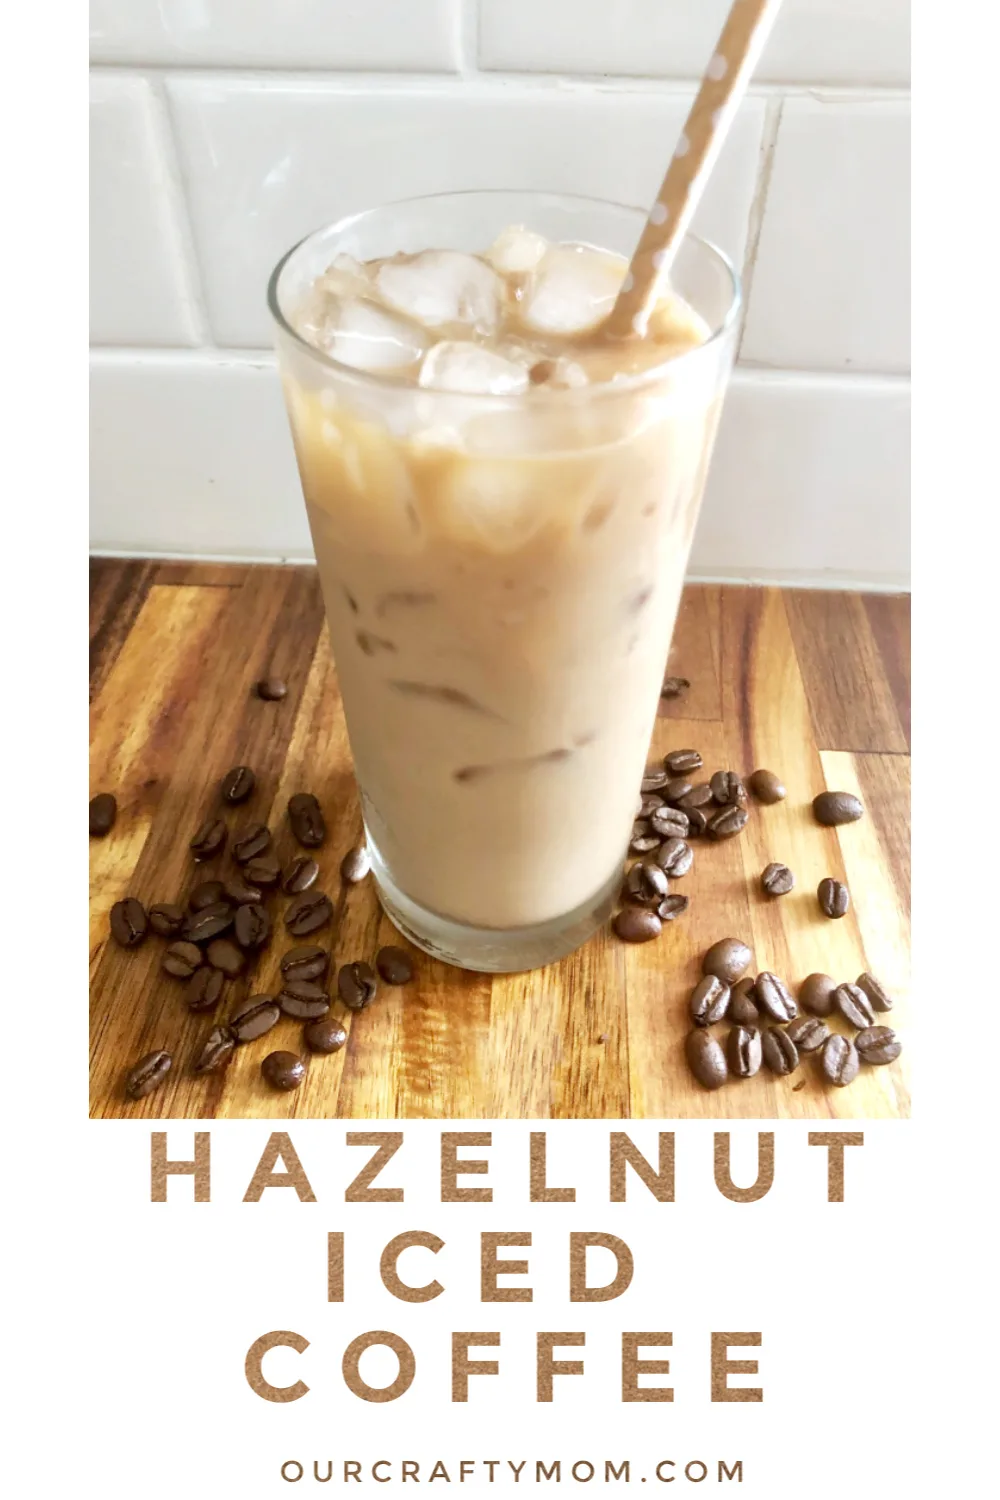 Iced Hazelnut Coffee Chiller Recipe 